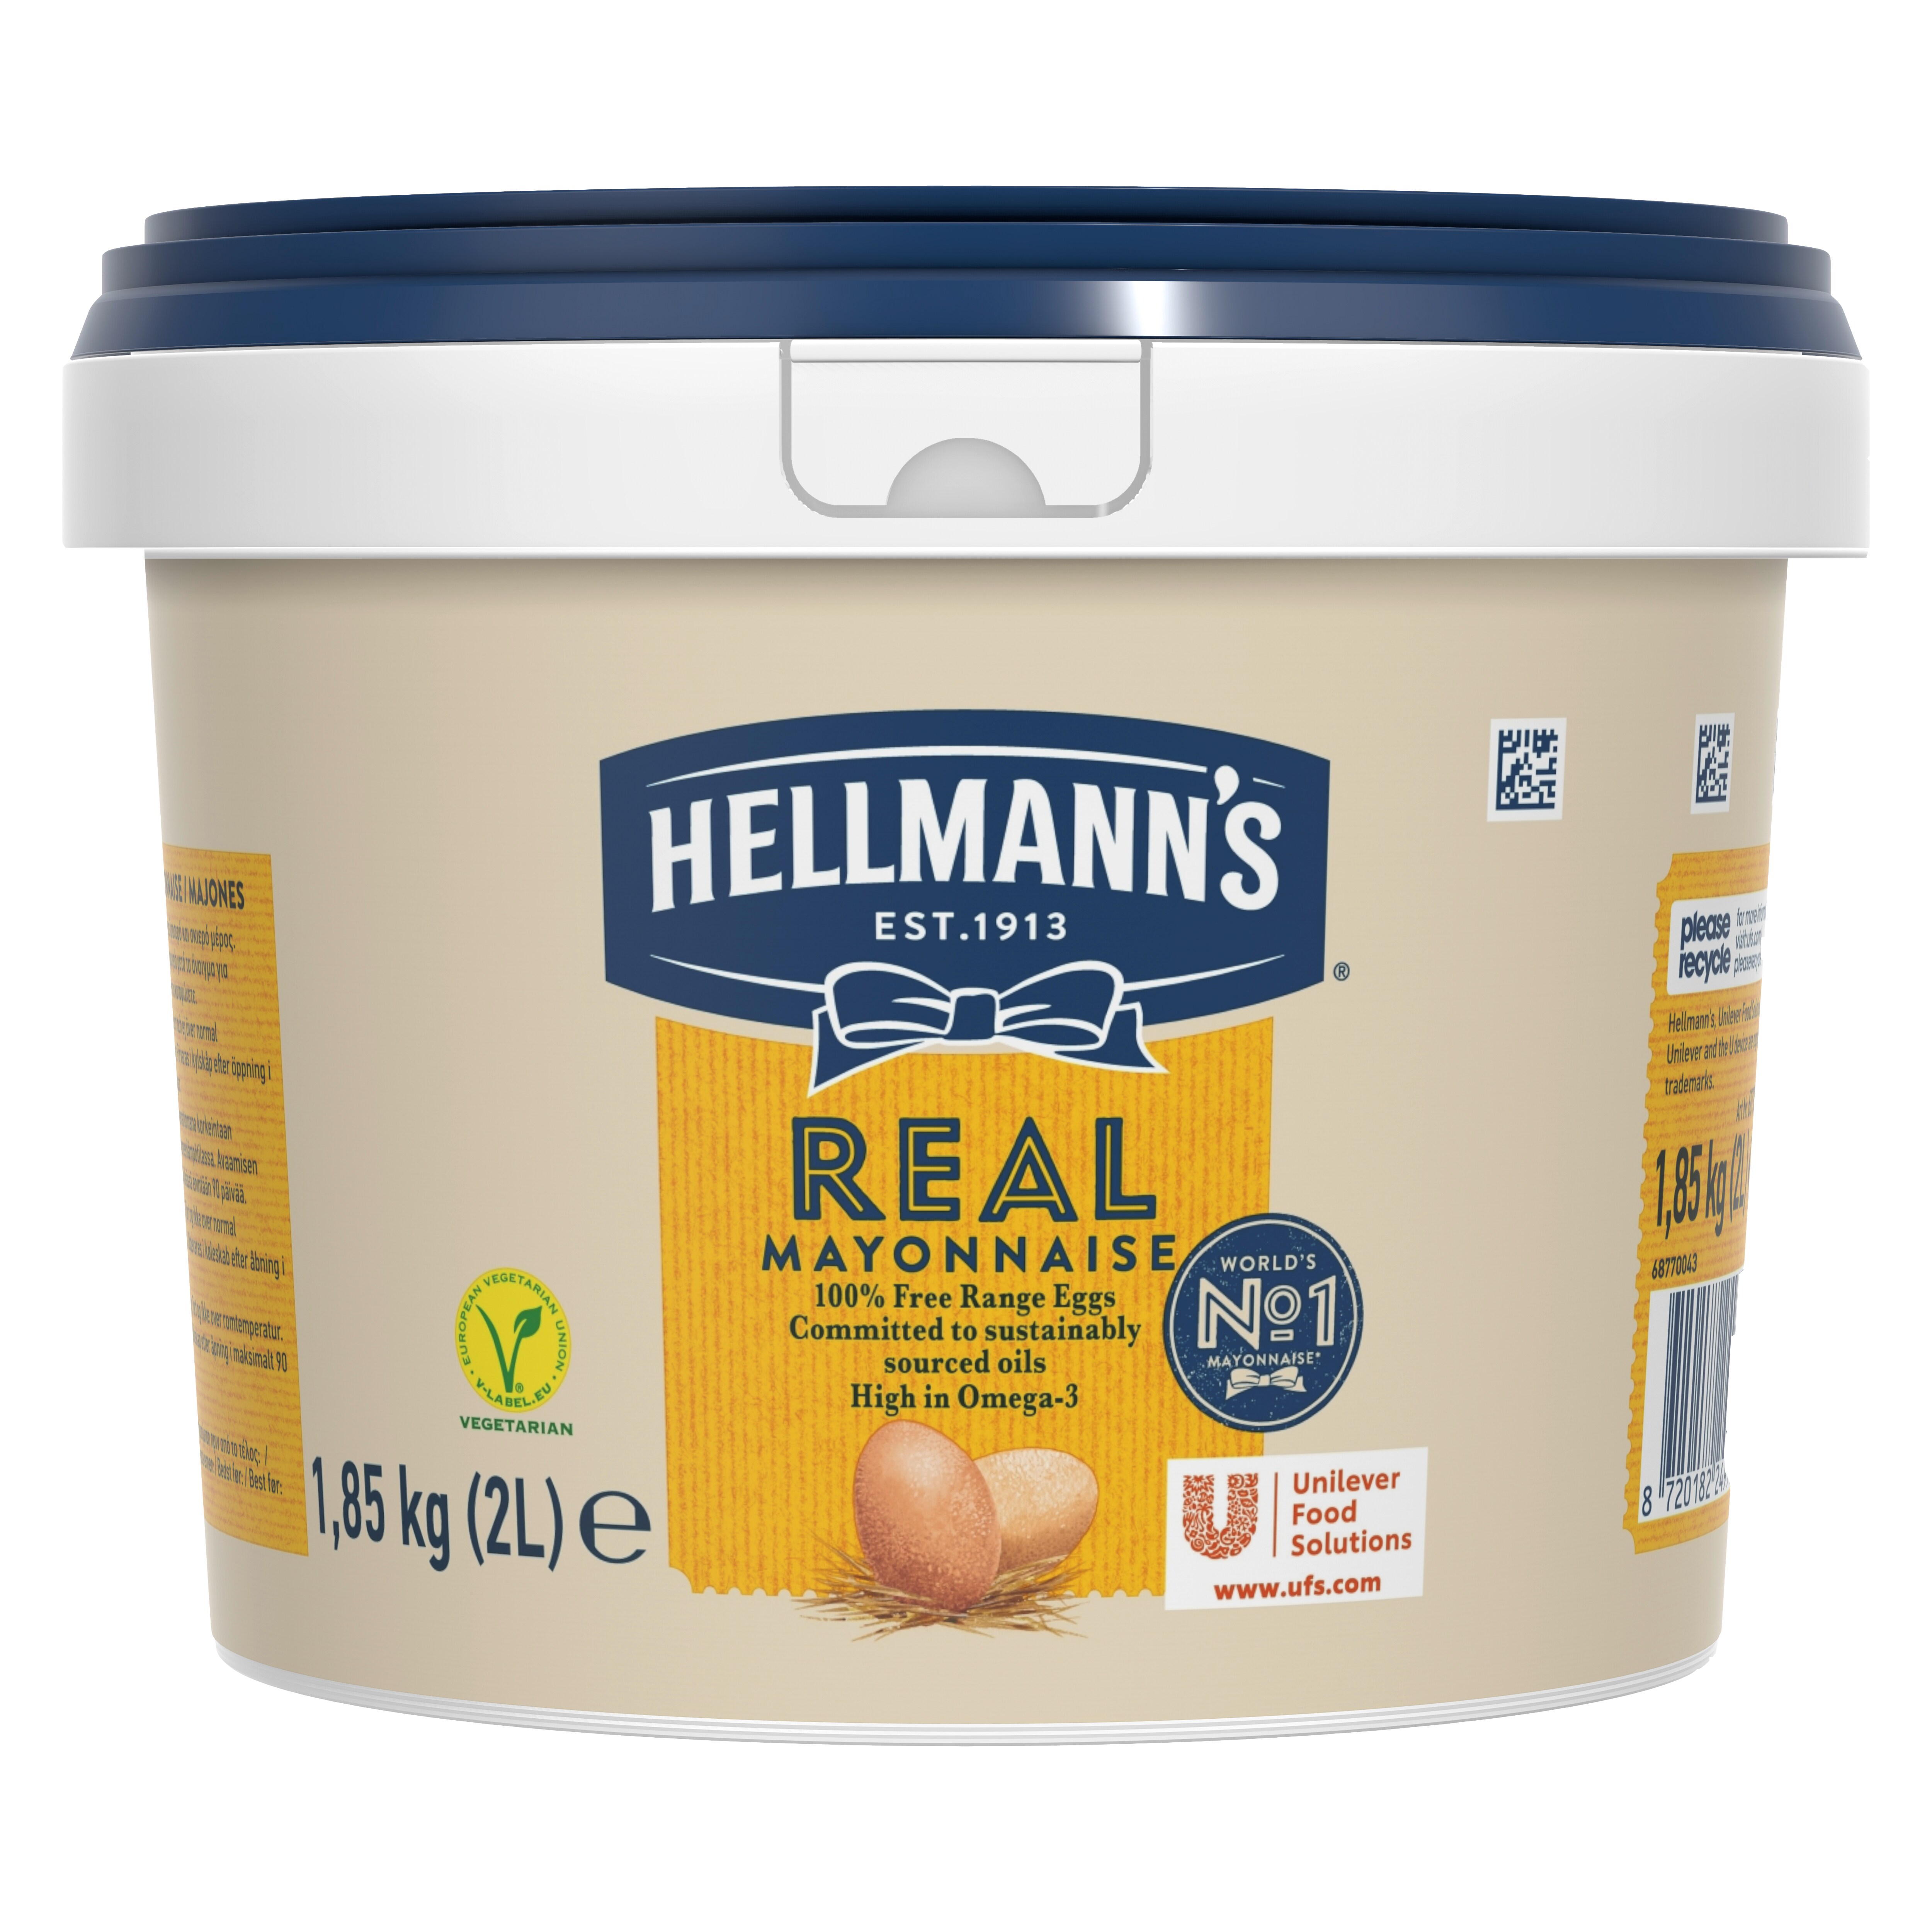 Hellmann's Real Mayonnaise 2 l. / 1,85 kg - 